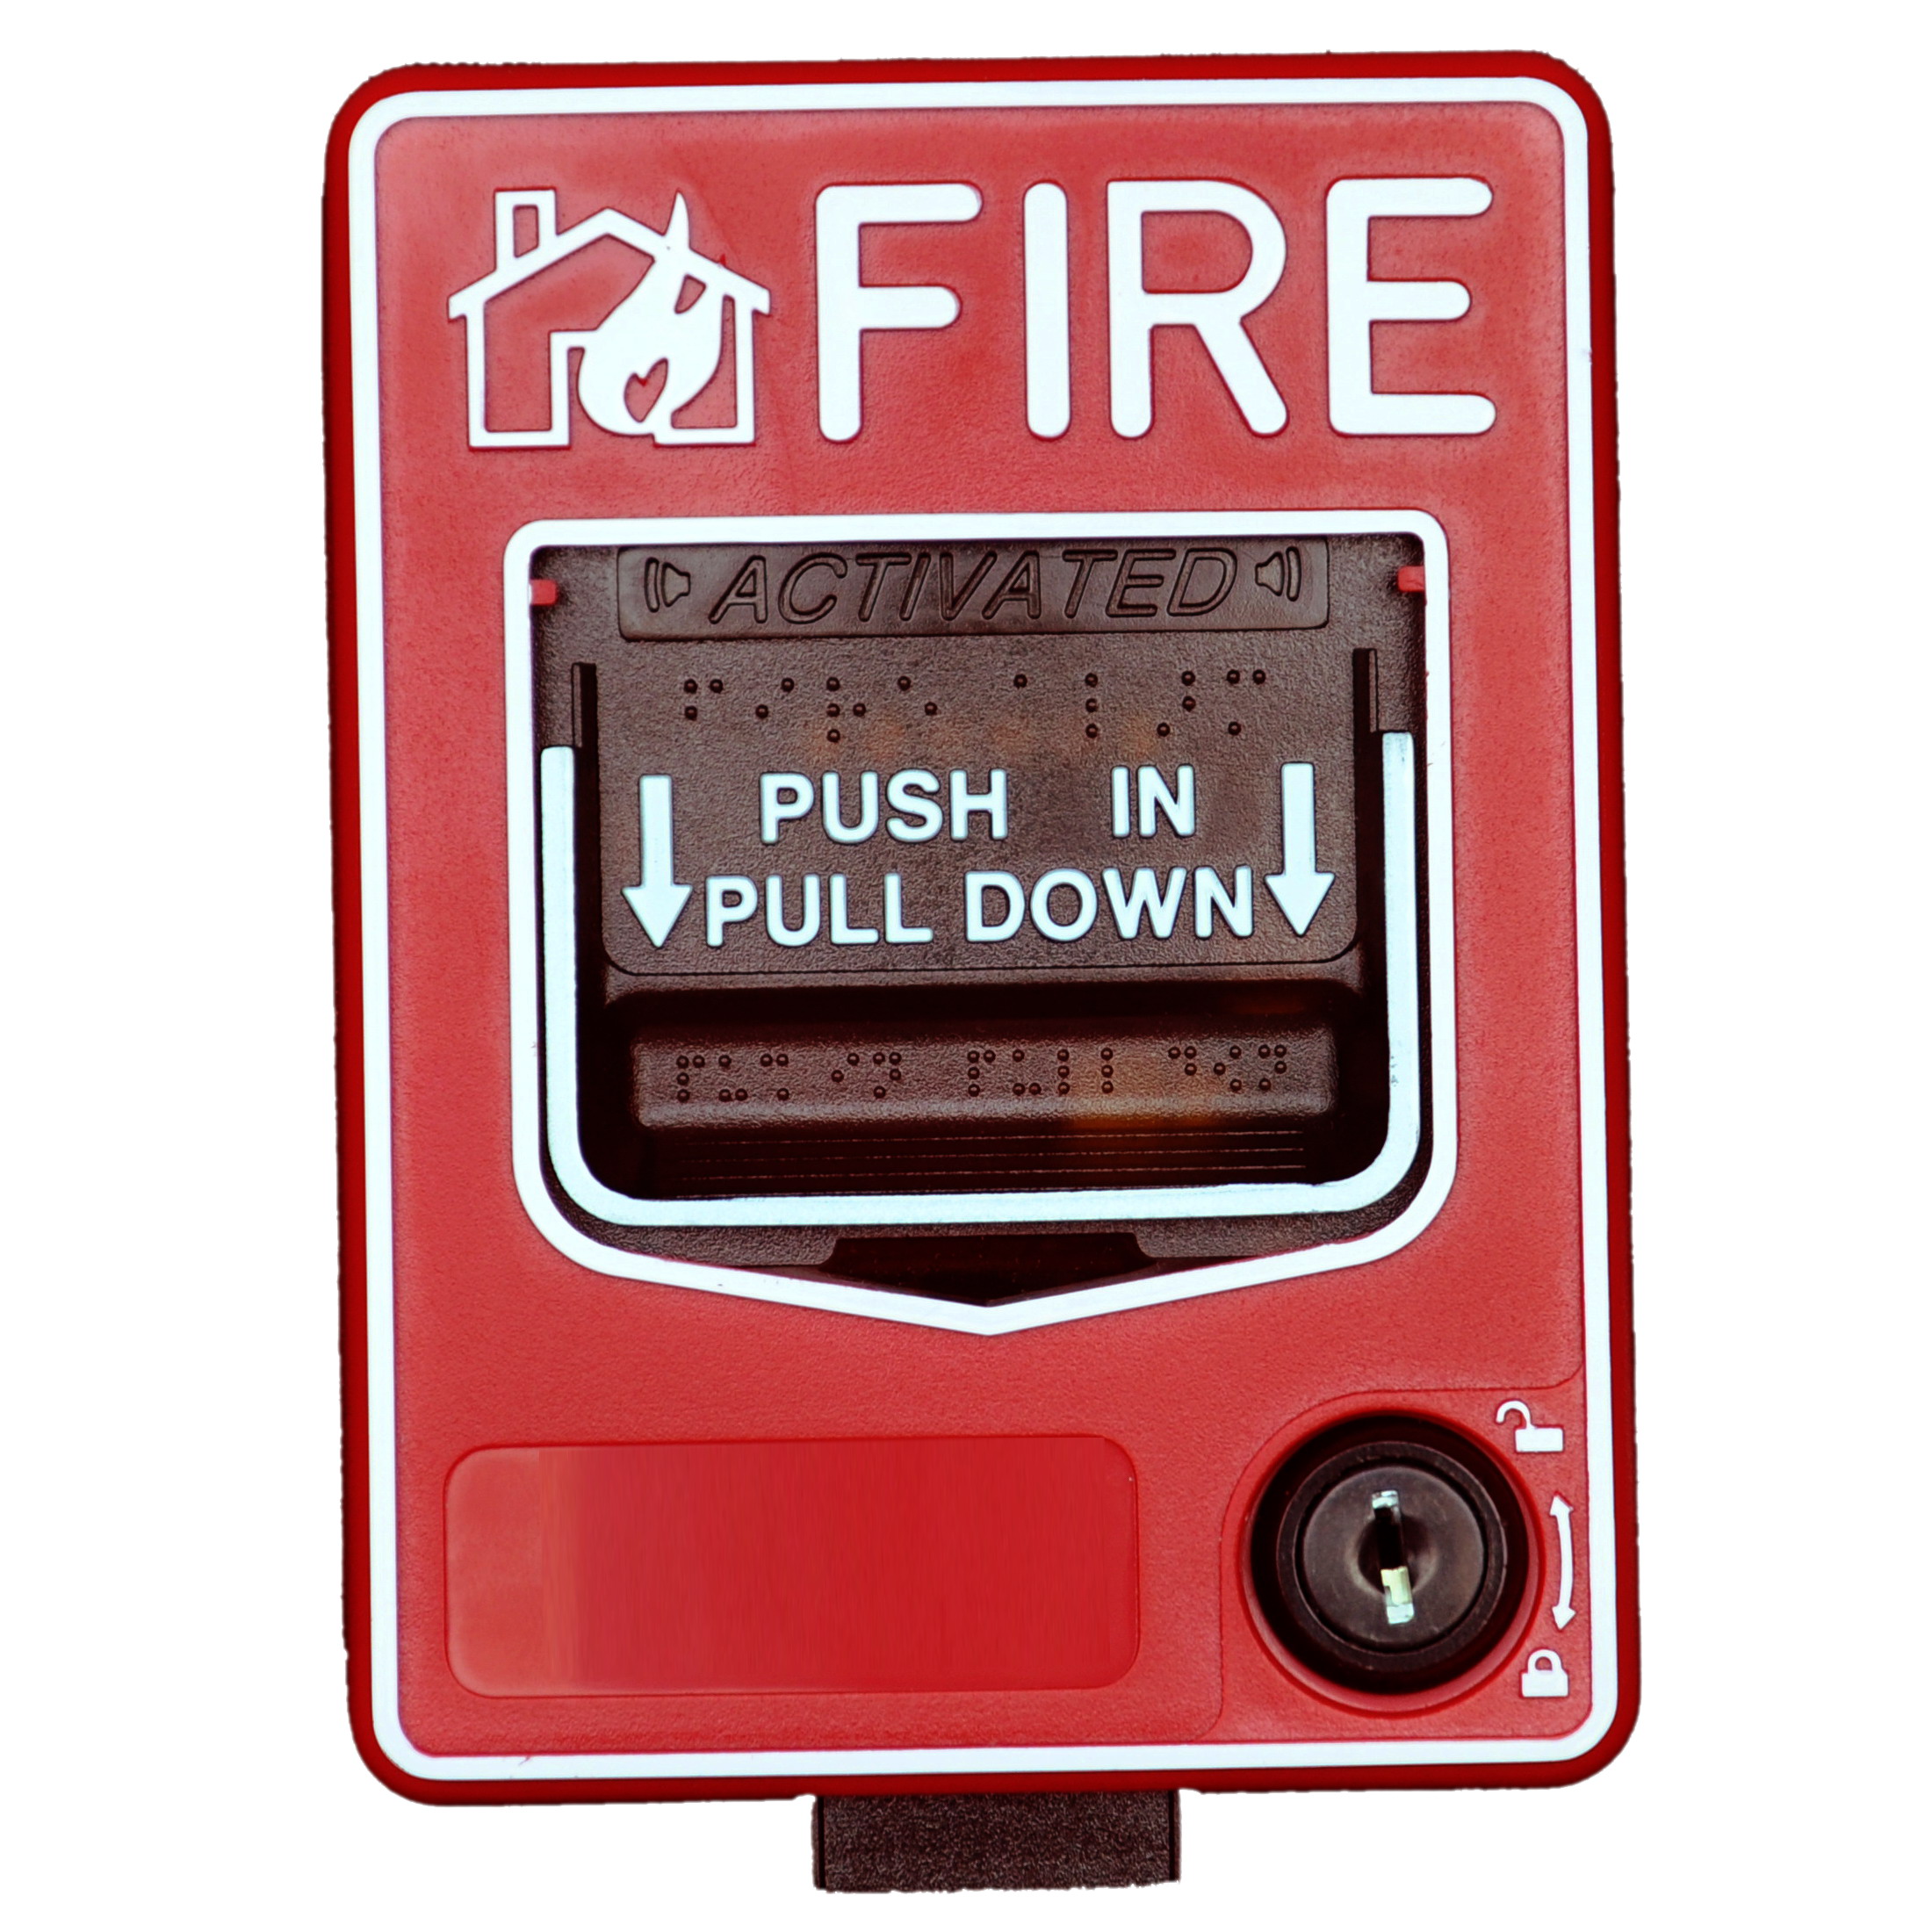 Fire alarm station